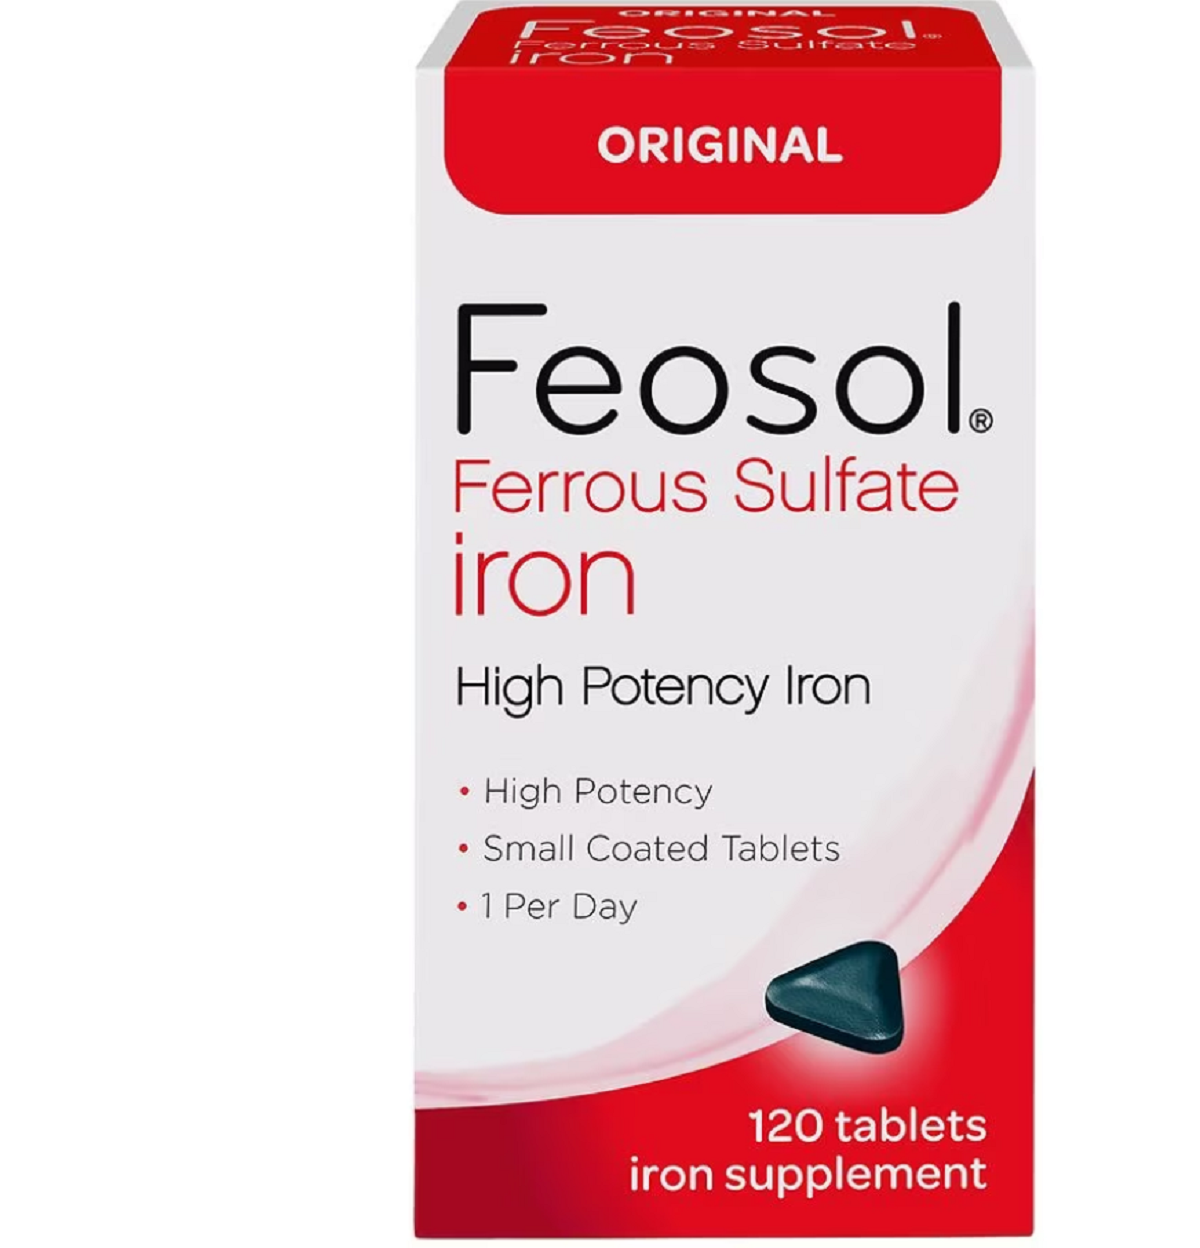 Feosol Iron Supplements Coupon, Original Ferrous Sulfate Iron Supplement Tablets